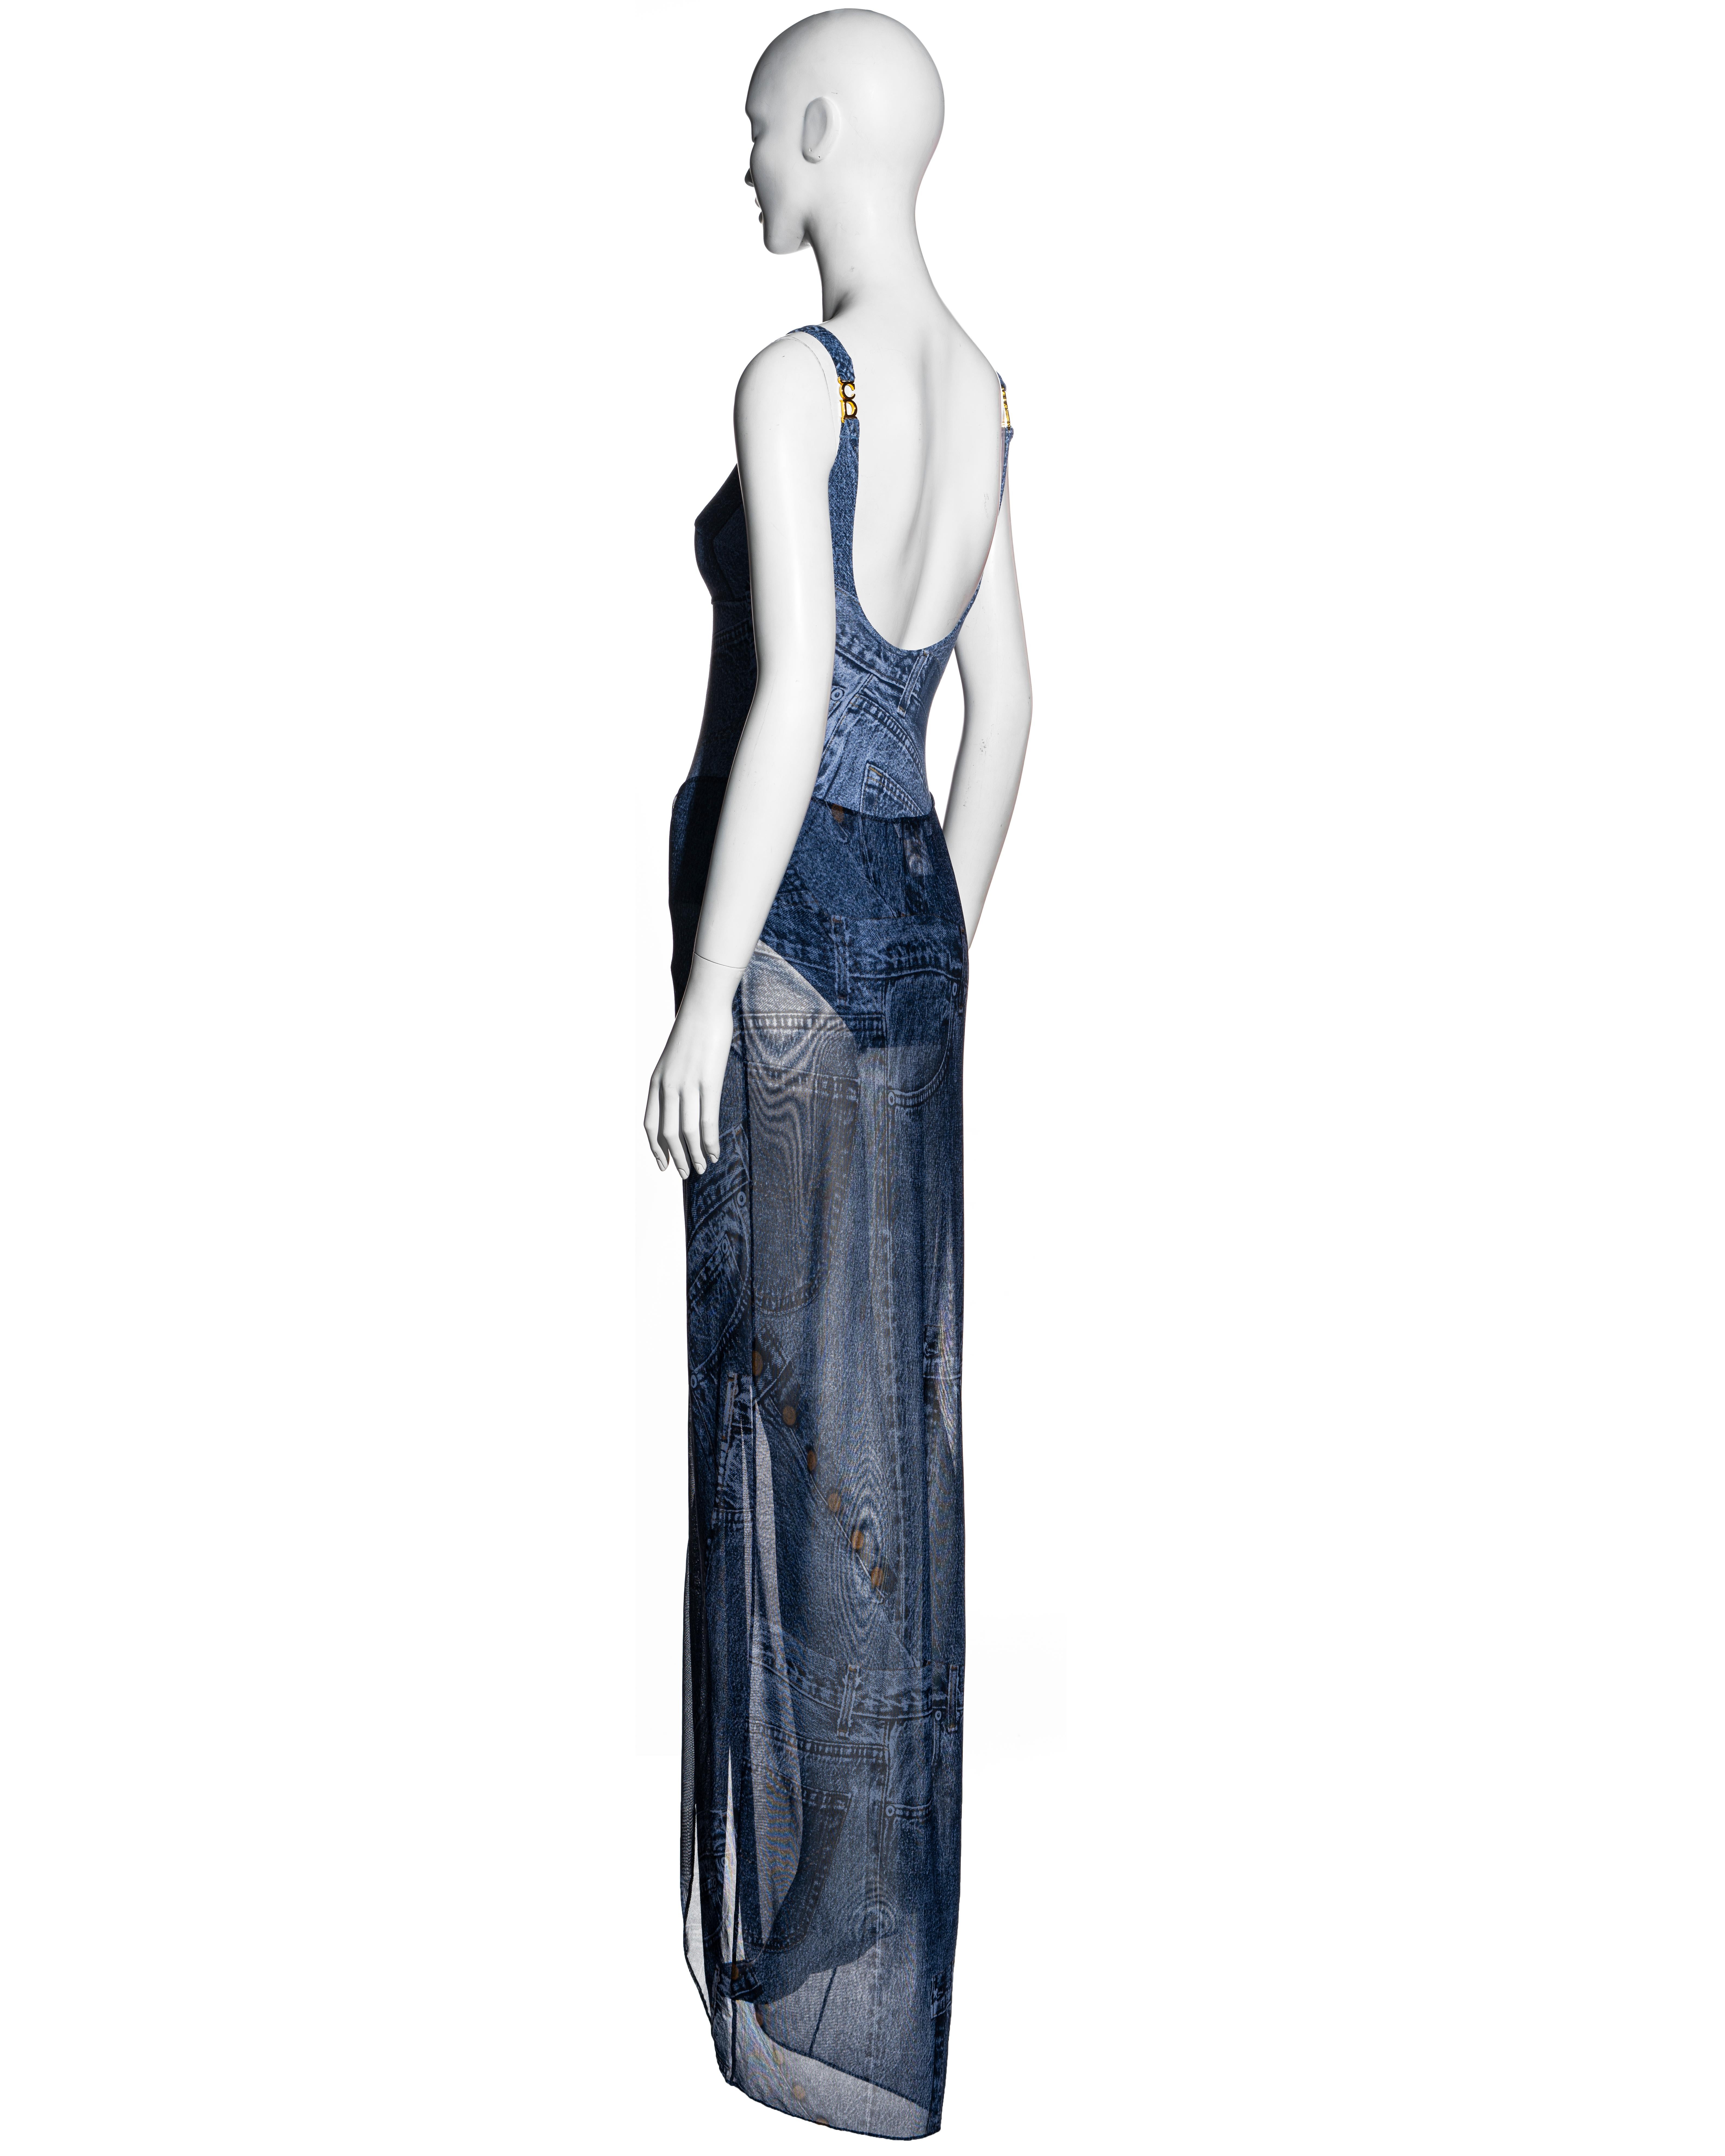 Christian Dior by John Galliano denim print bodysuit and sarong skirt, ss 2002 1